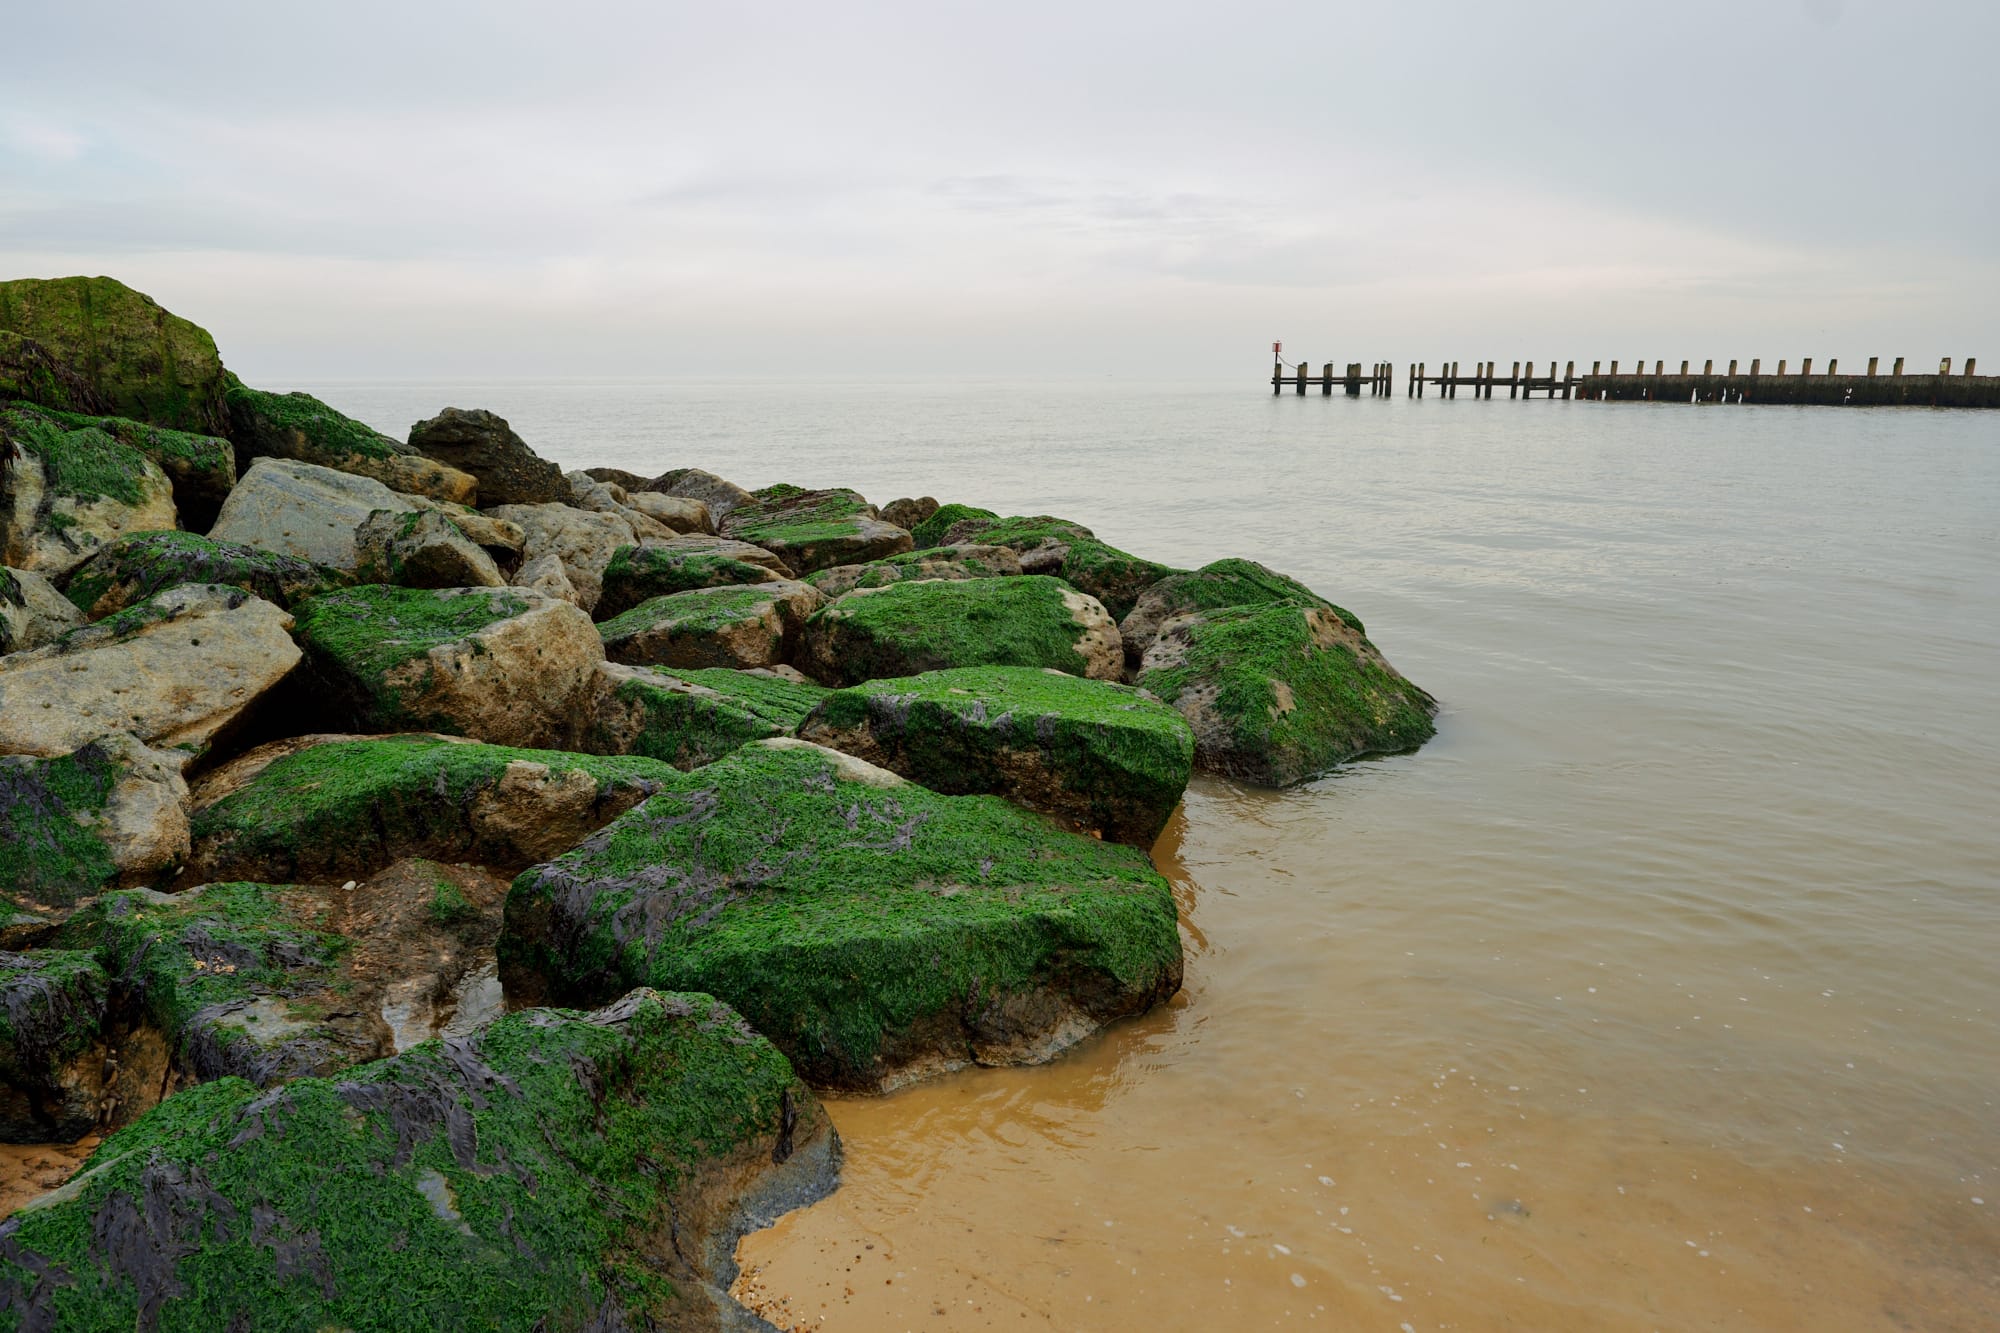 seaweed-covered rocks and groyne